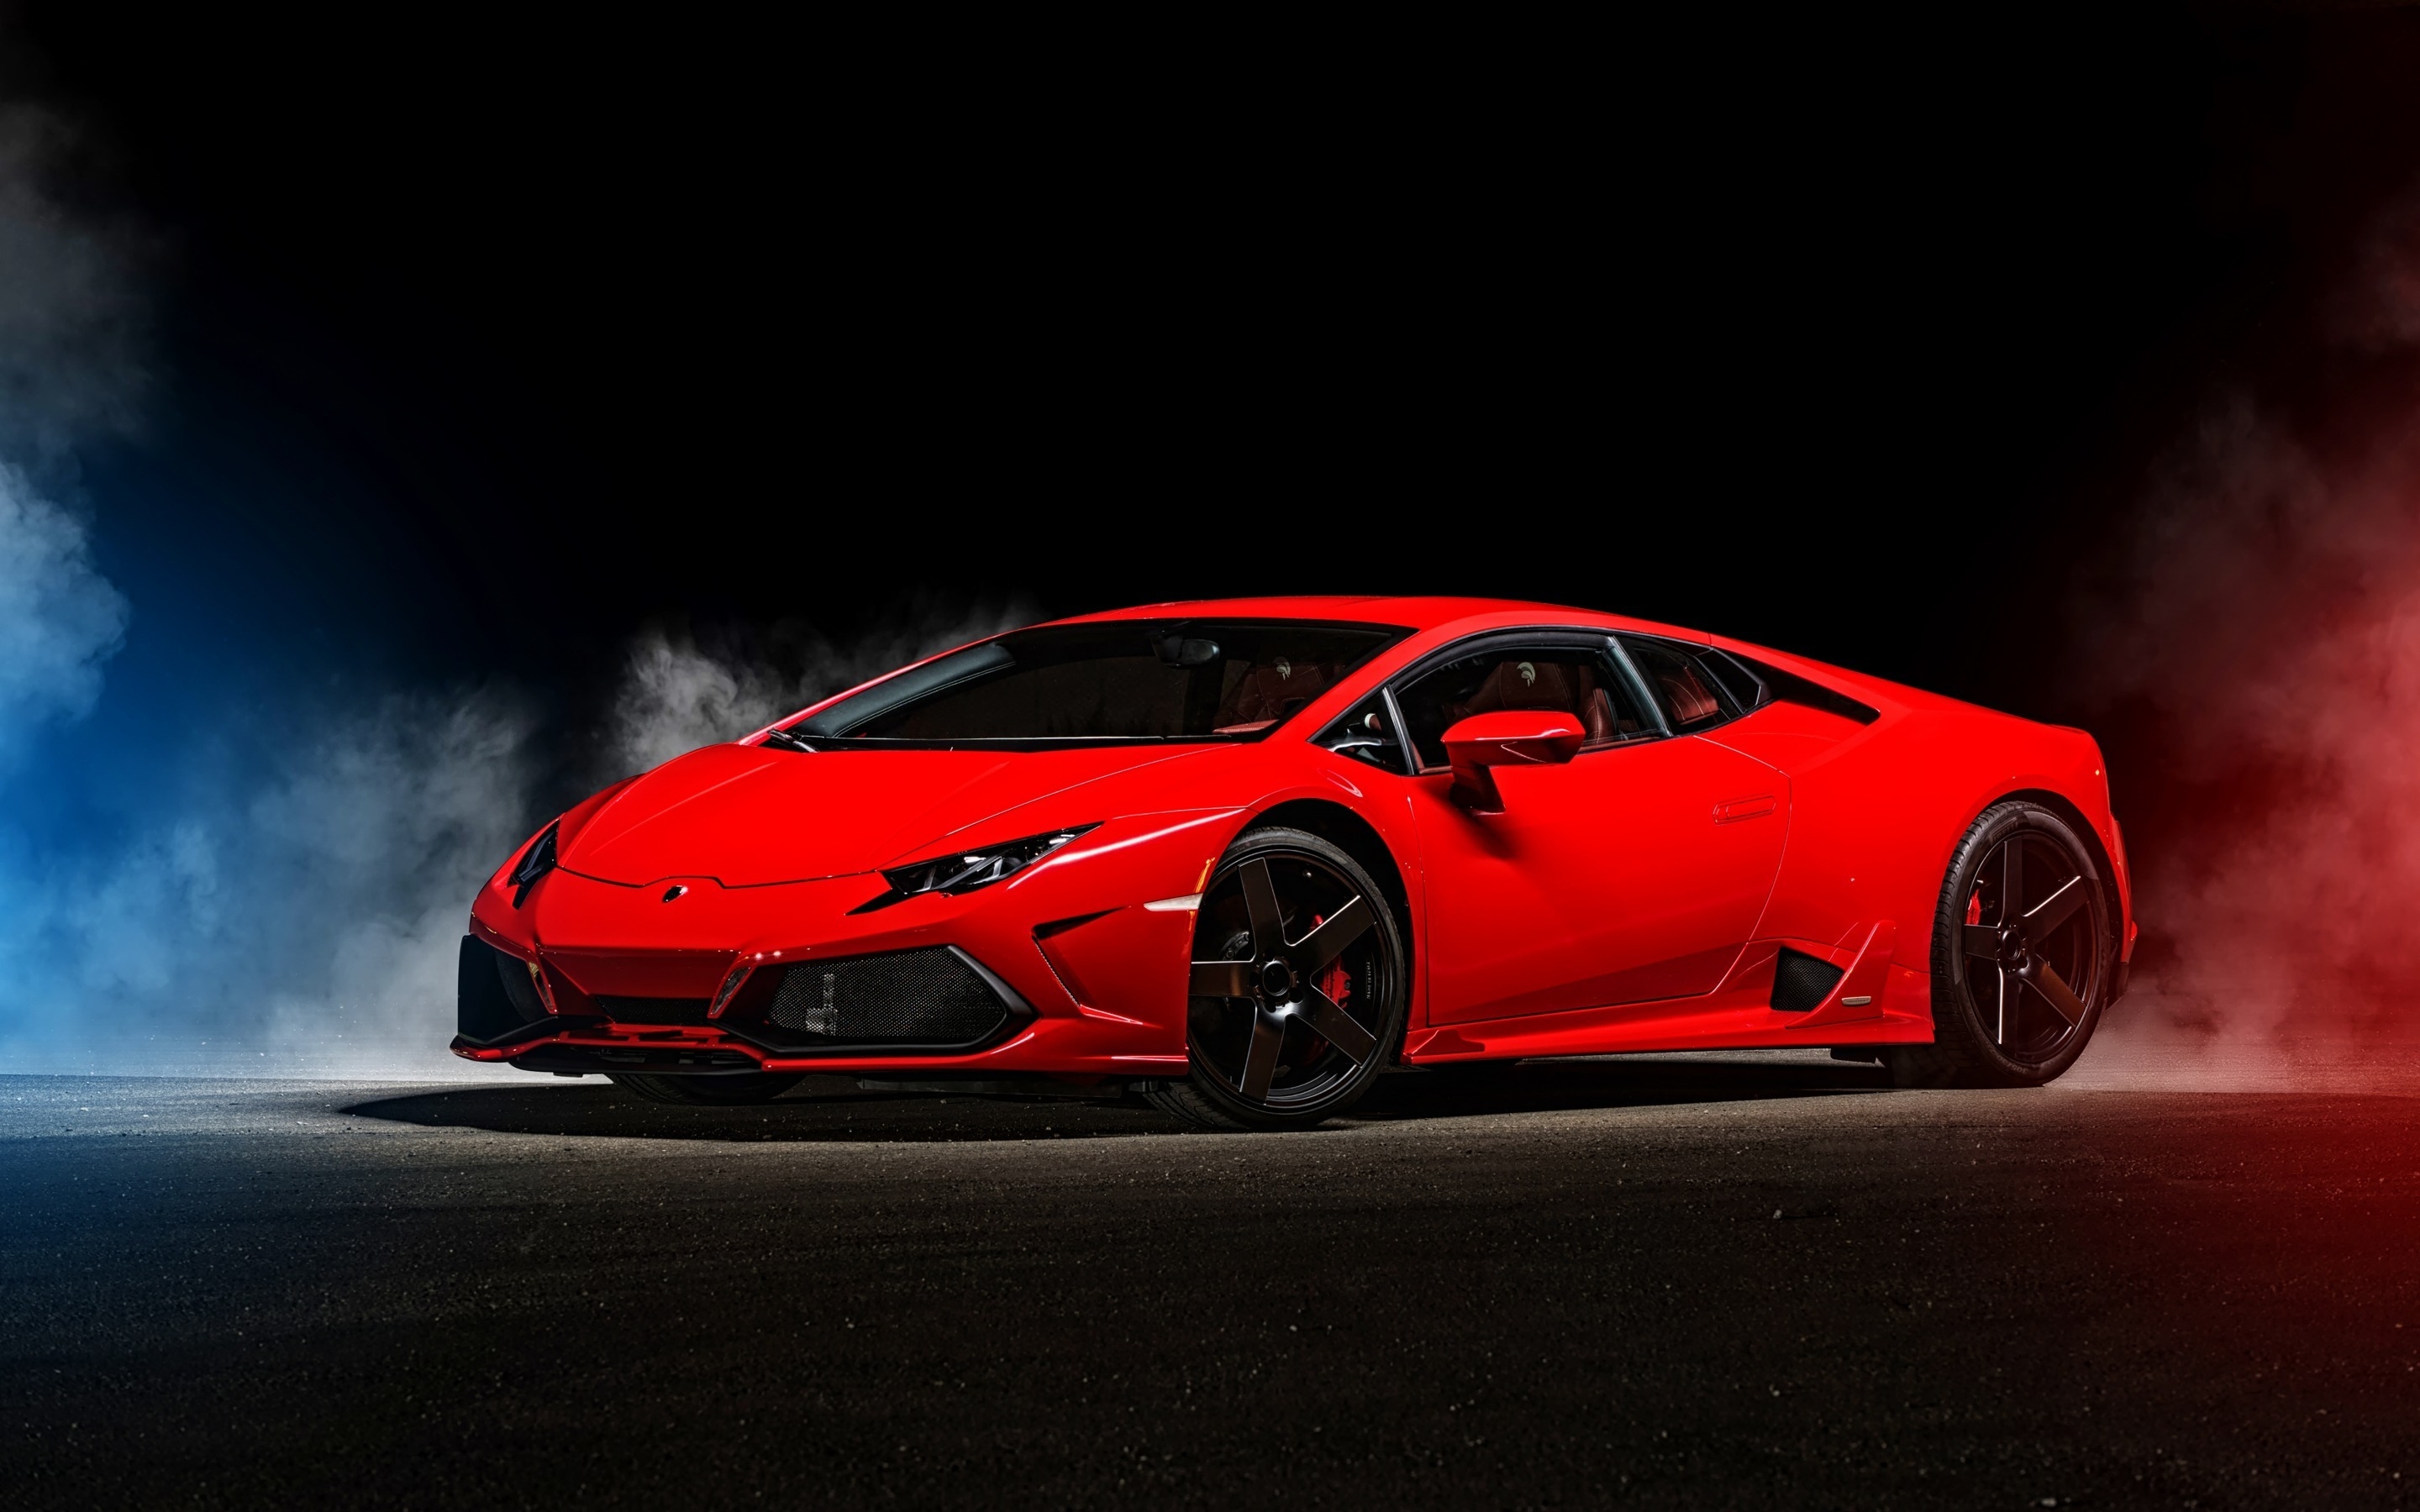 2015 Red Lamborghini Huracan for 2880 x 1800 Retina Display resolution